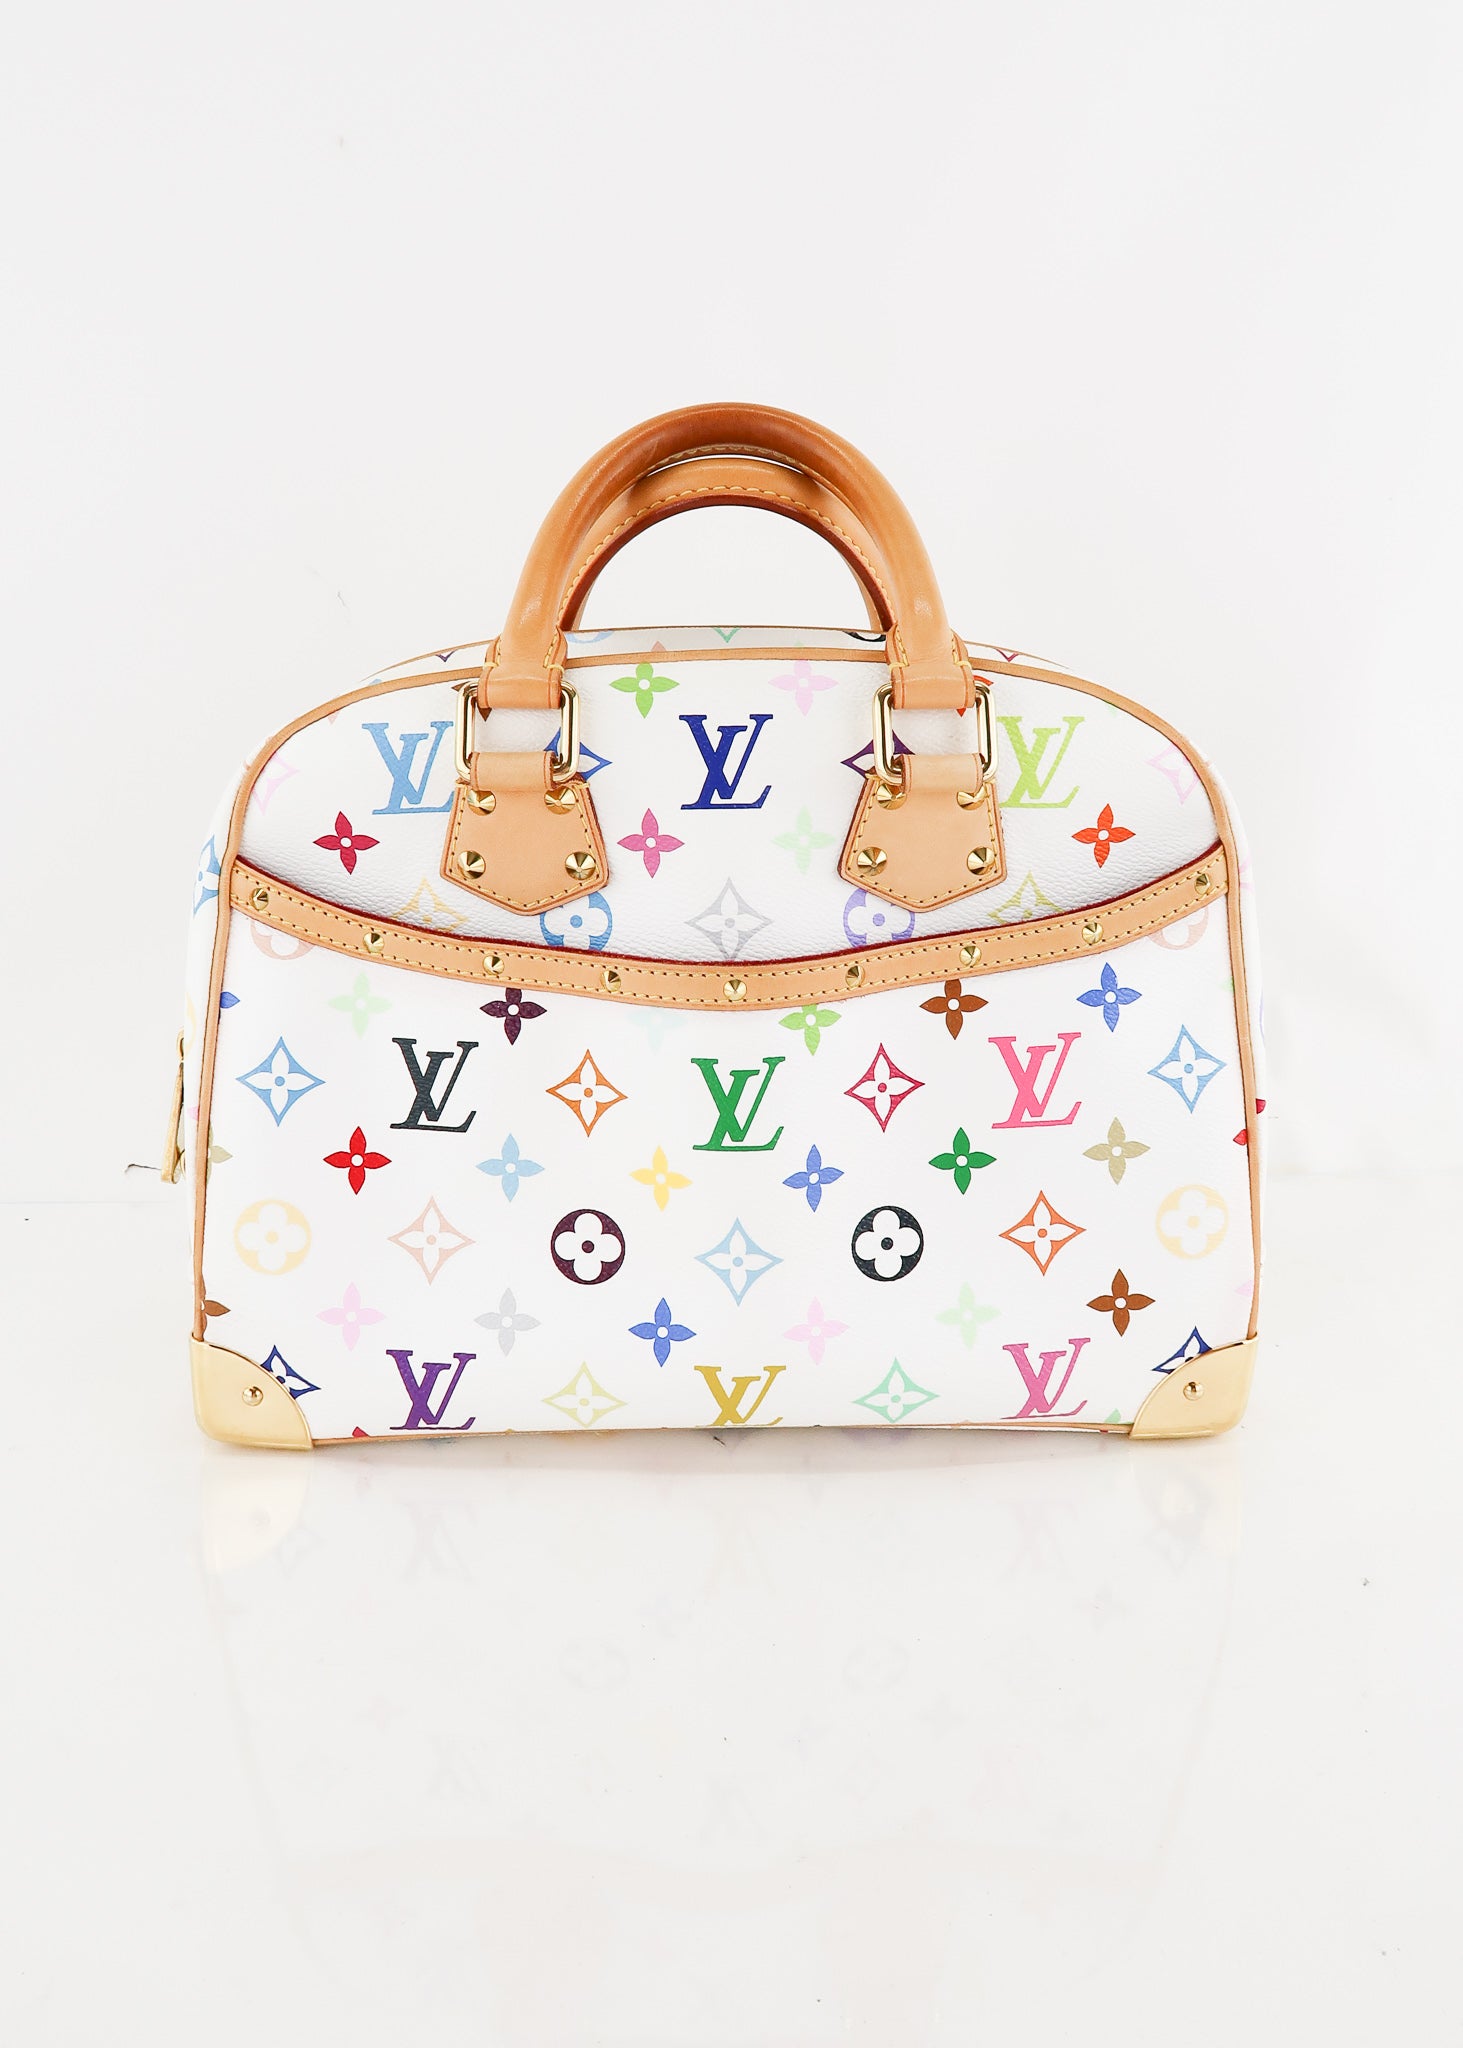 Louis+Vuitton+purse+*White+monogram+collection+-+Tootsie+roll - Women's  Handbags - Pismo Beach, California, Facebook Marketplace